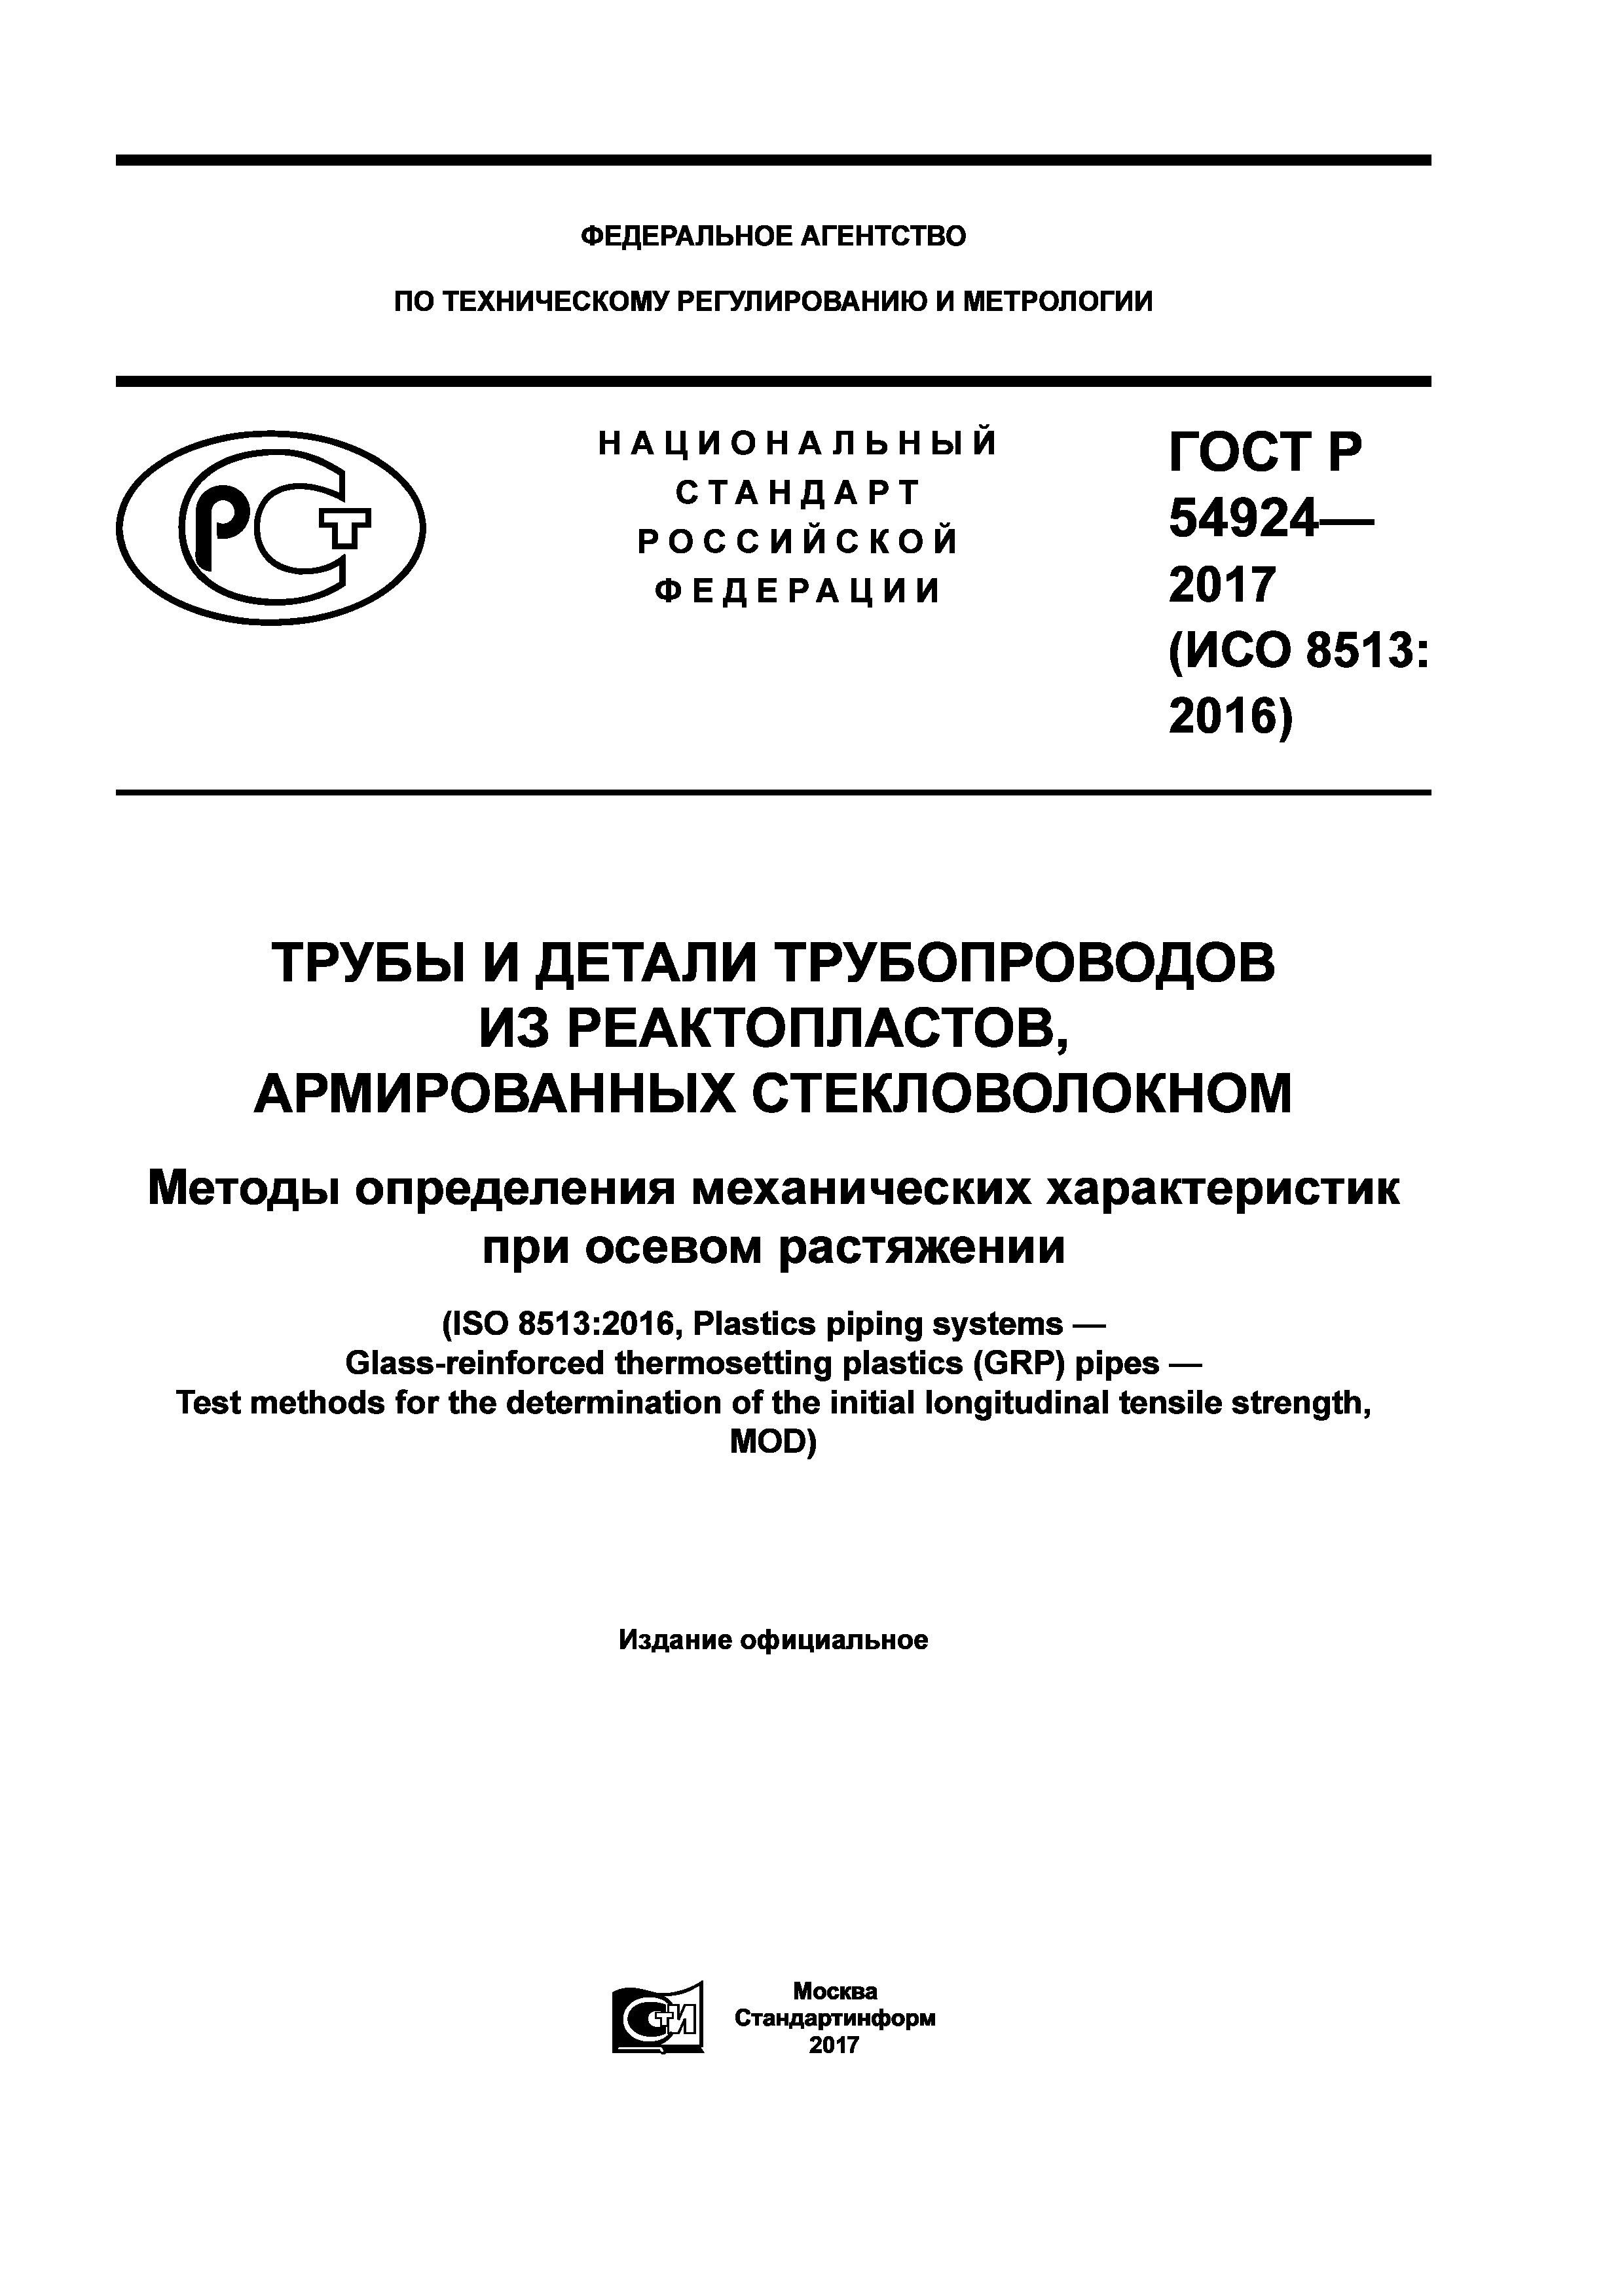 ГОСТ Р 54924-2017